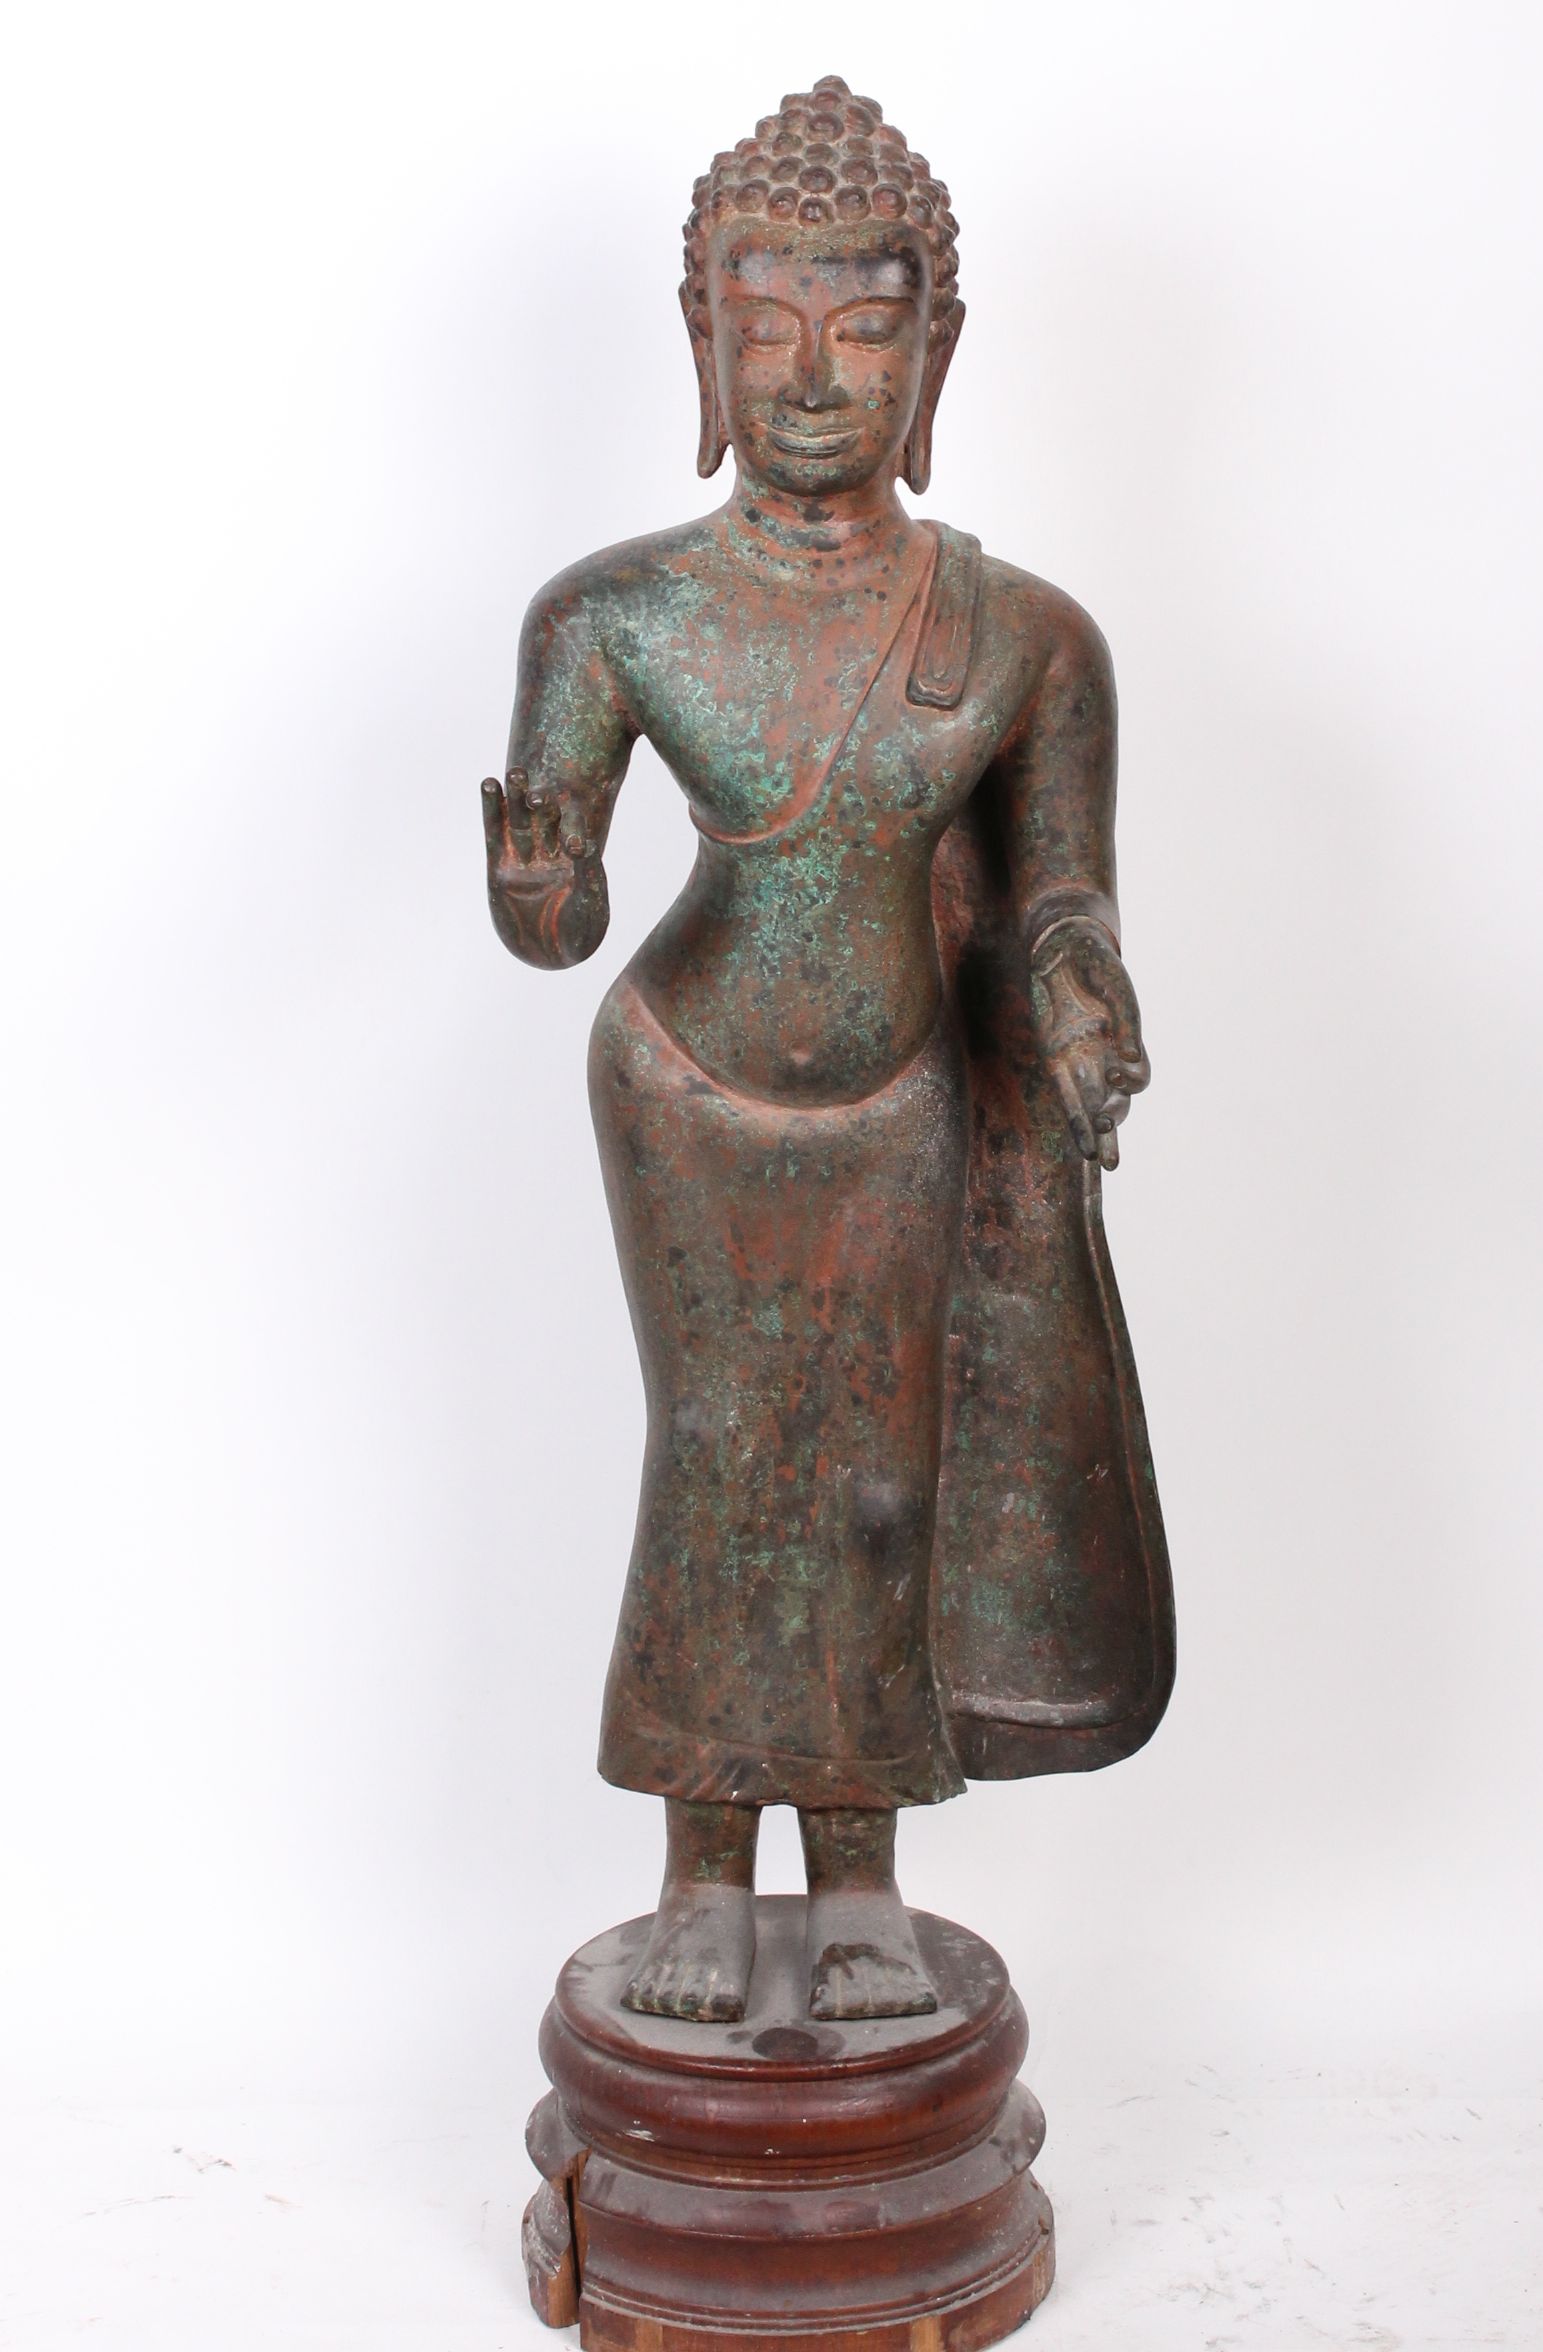 A standing bronze figure of Buddha, Vitarka mudra gesture, on wooden base 122cm high